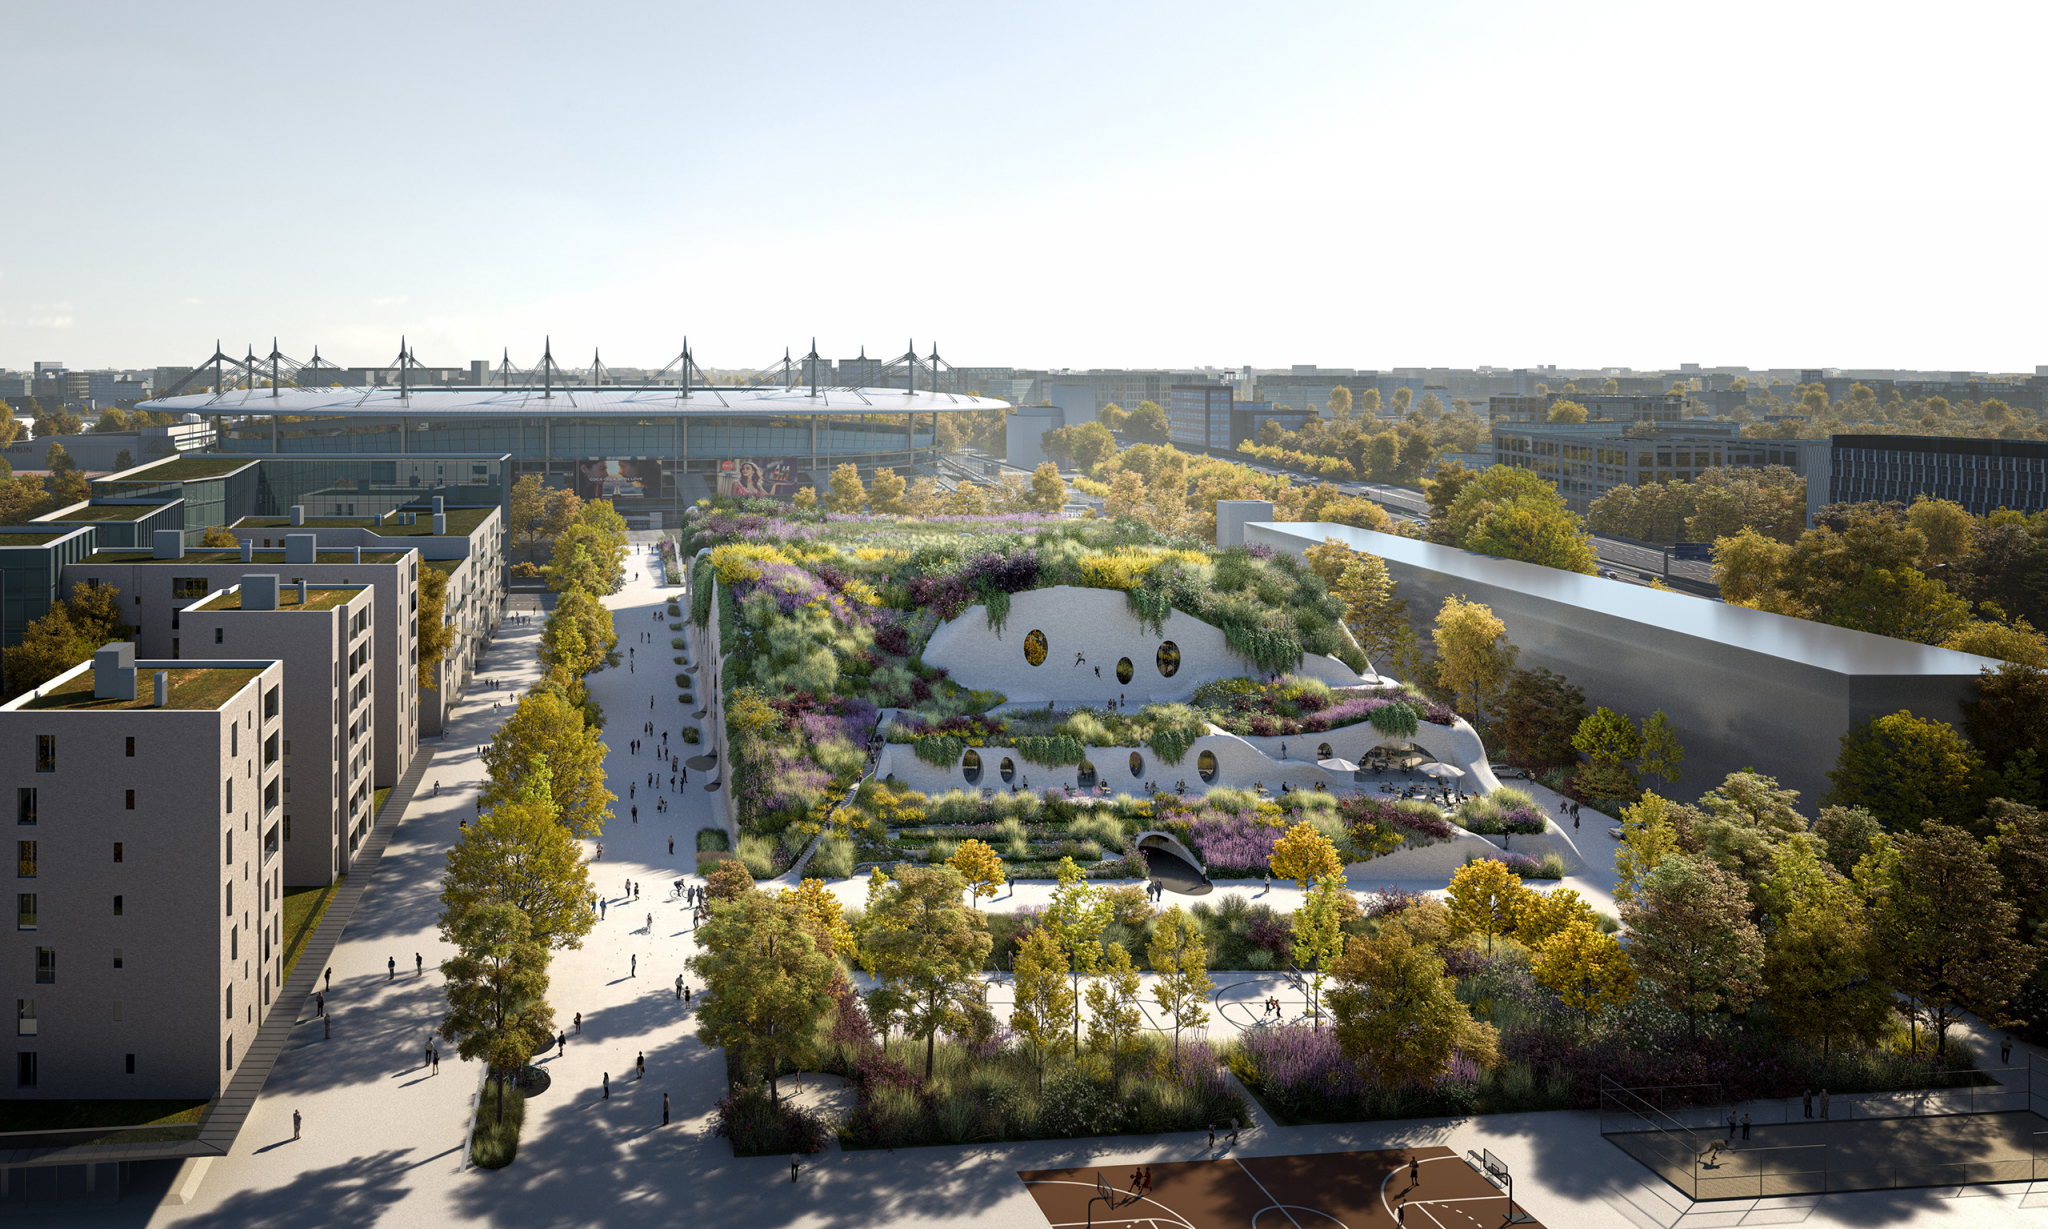 Architects reveal design of unsuccessful Paris 2024 Aquatic Centre proposal